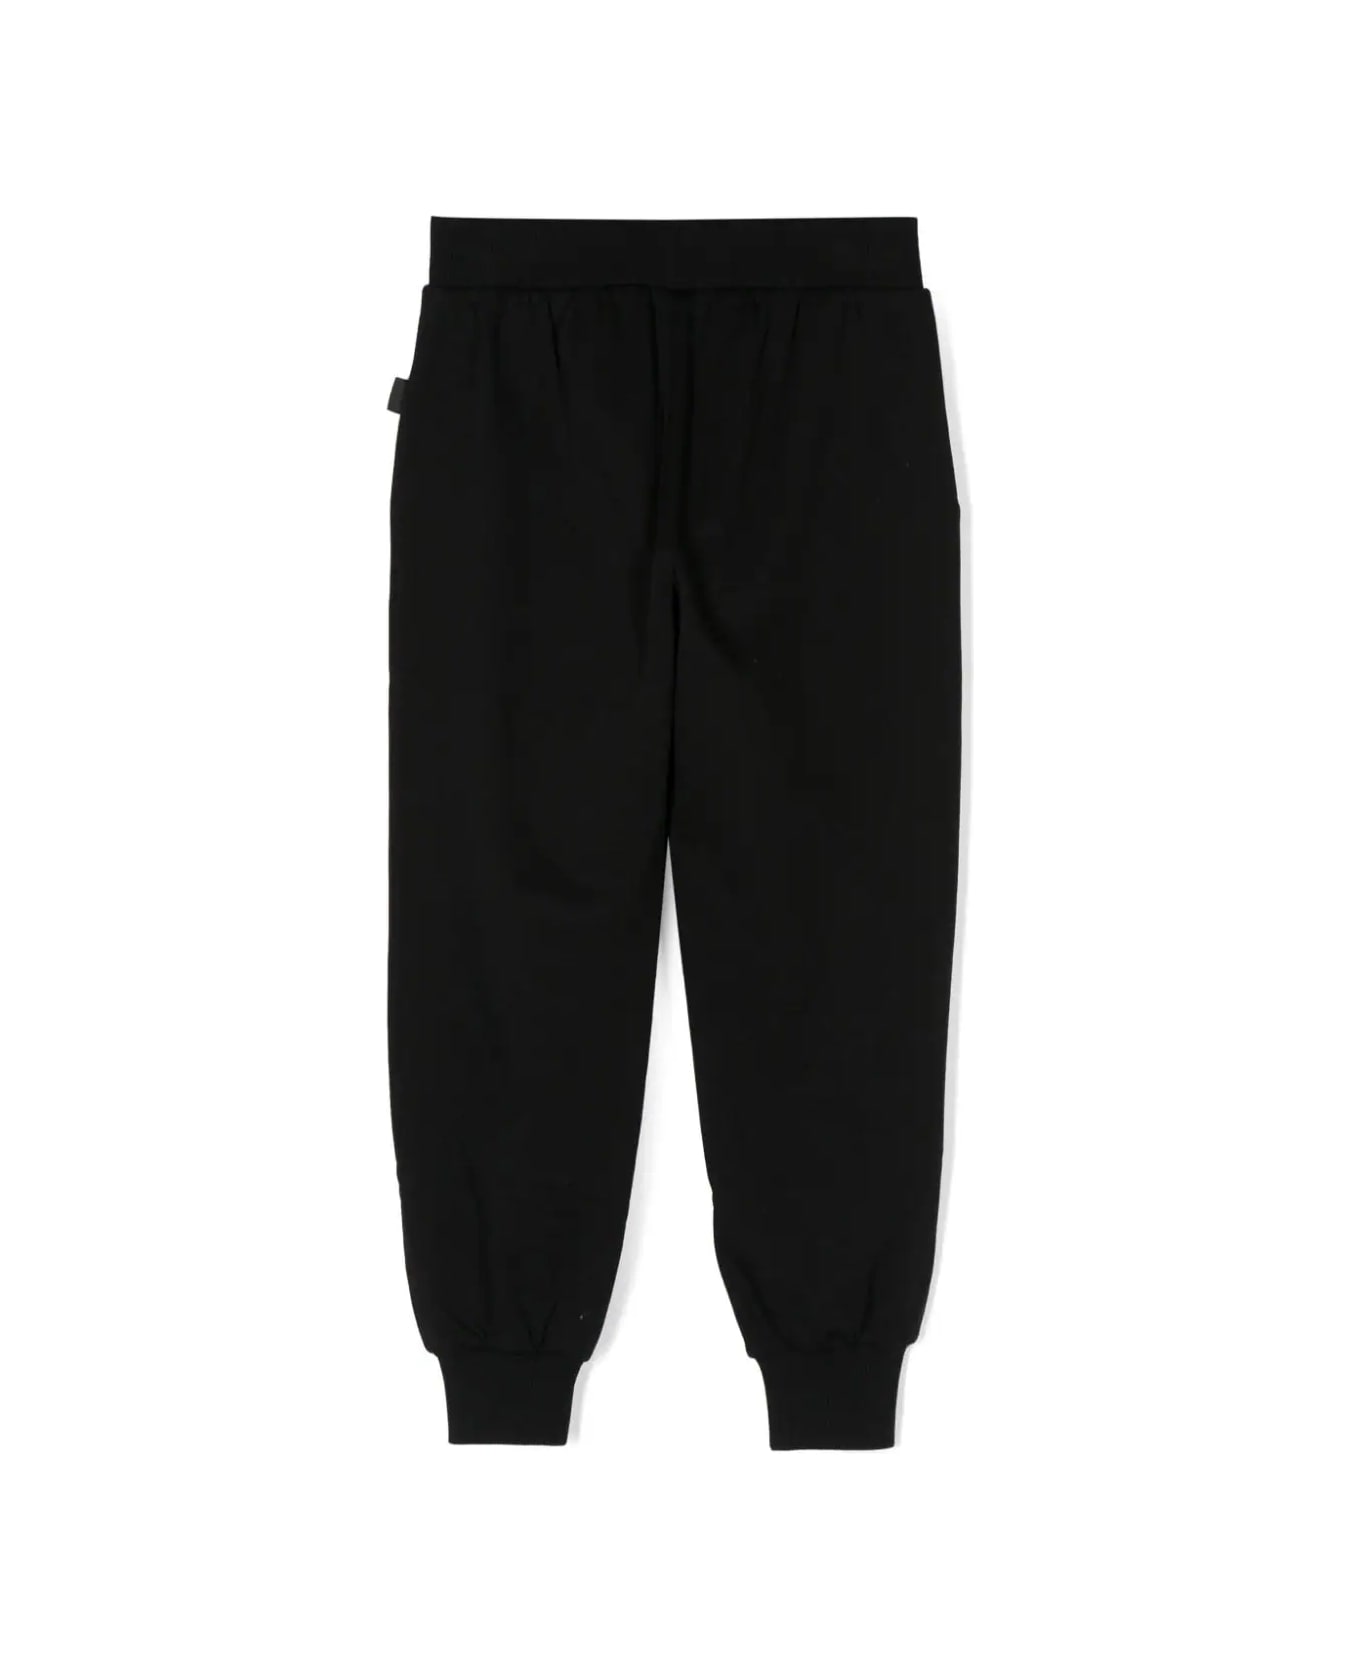 GCDS Mini Printed Trousers - Nero/black